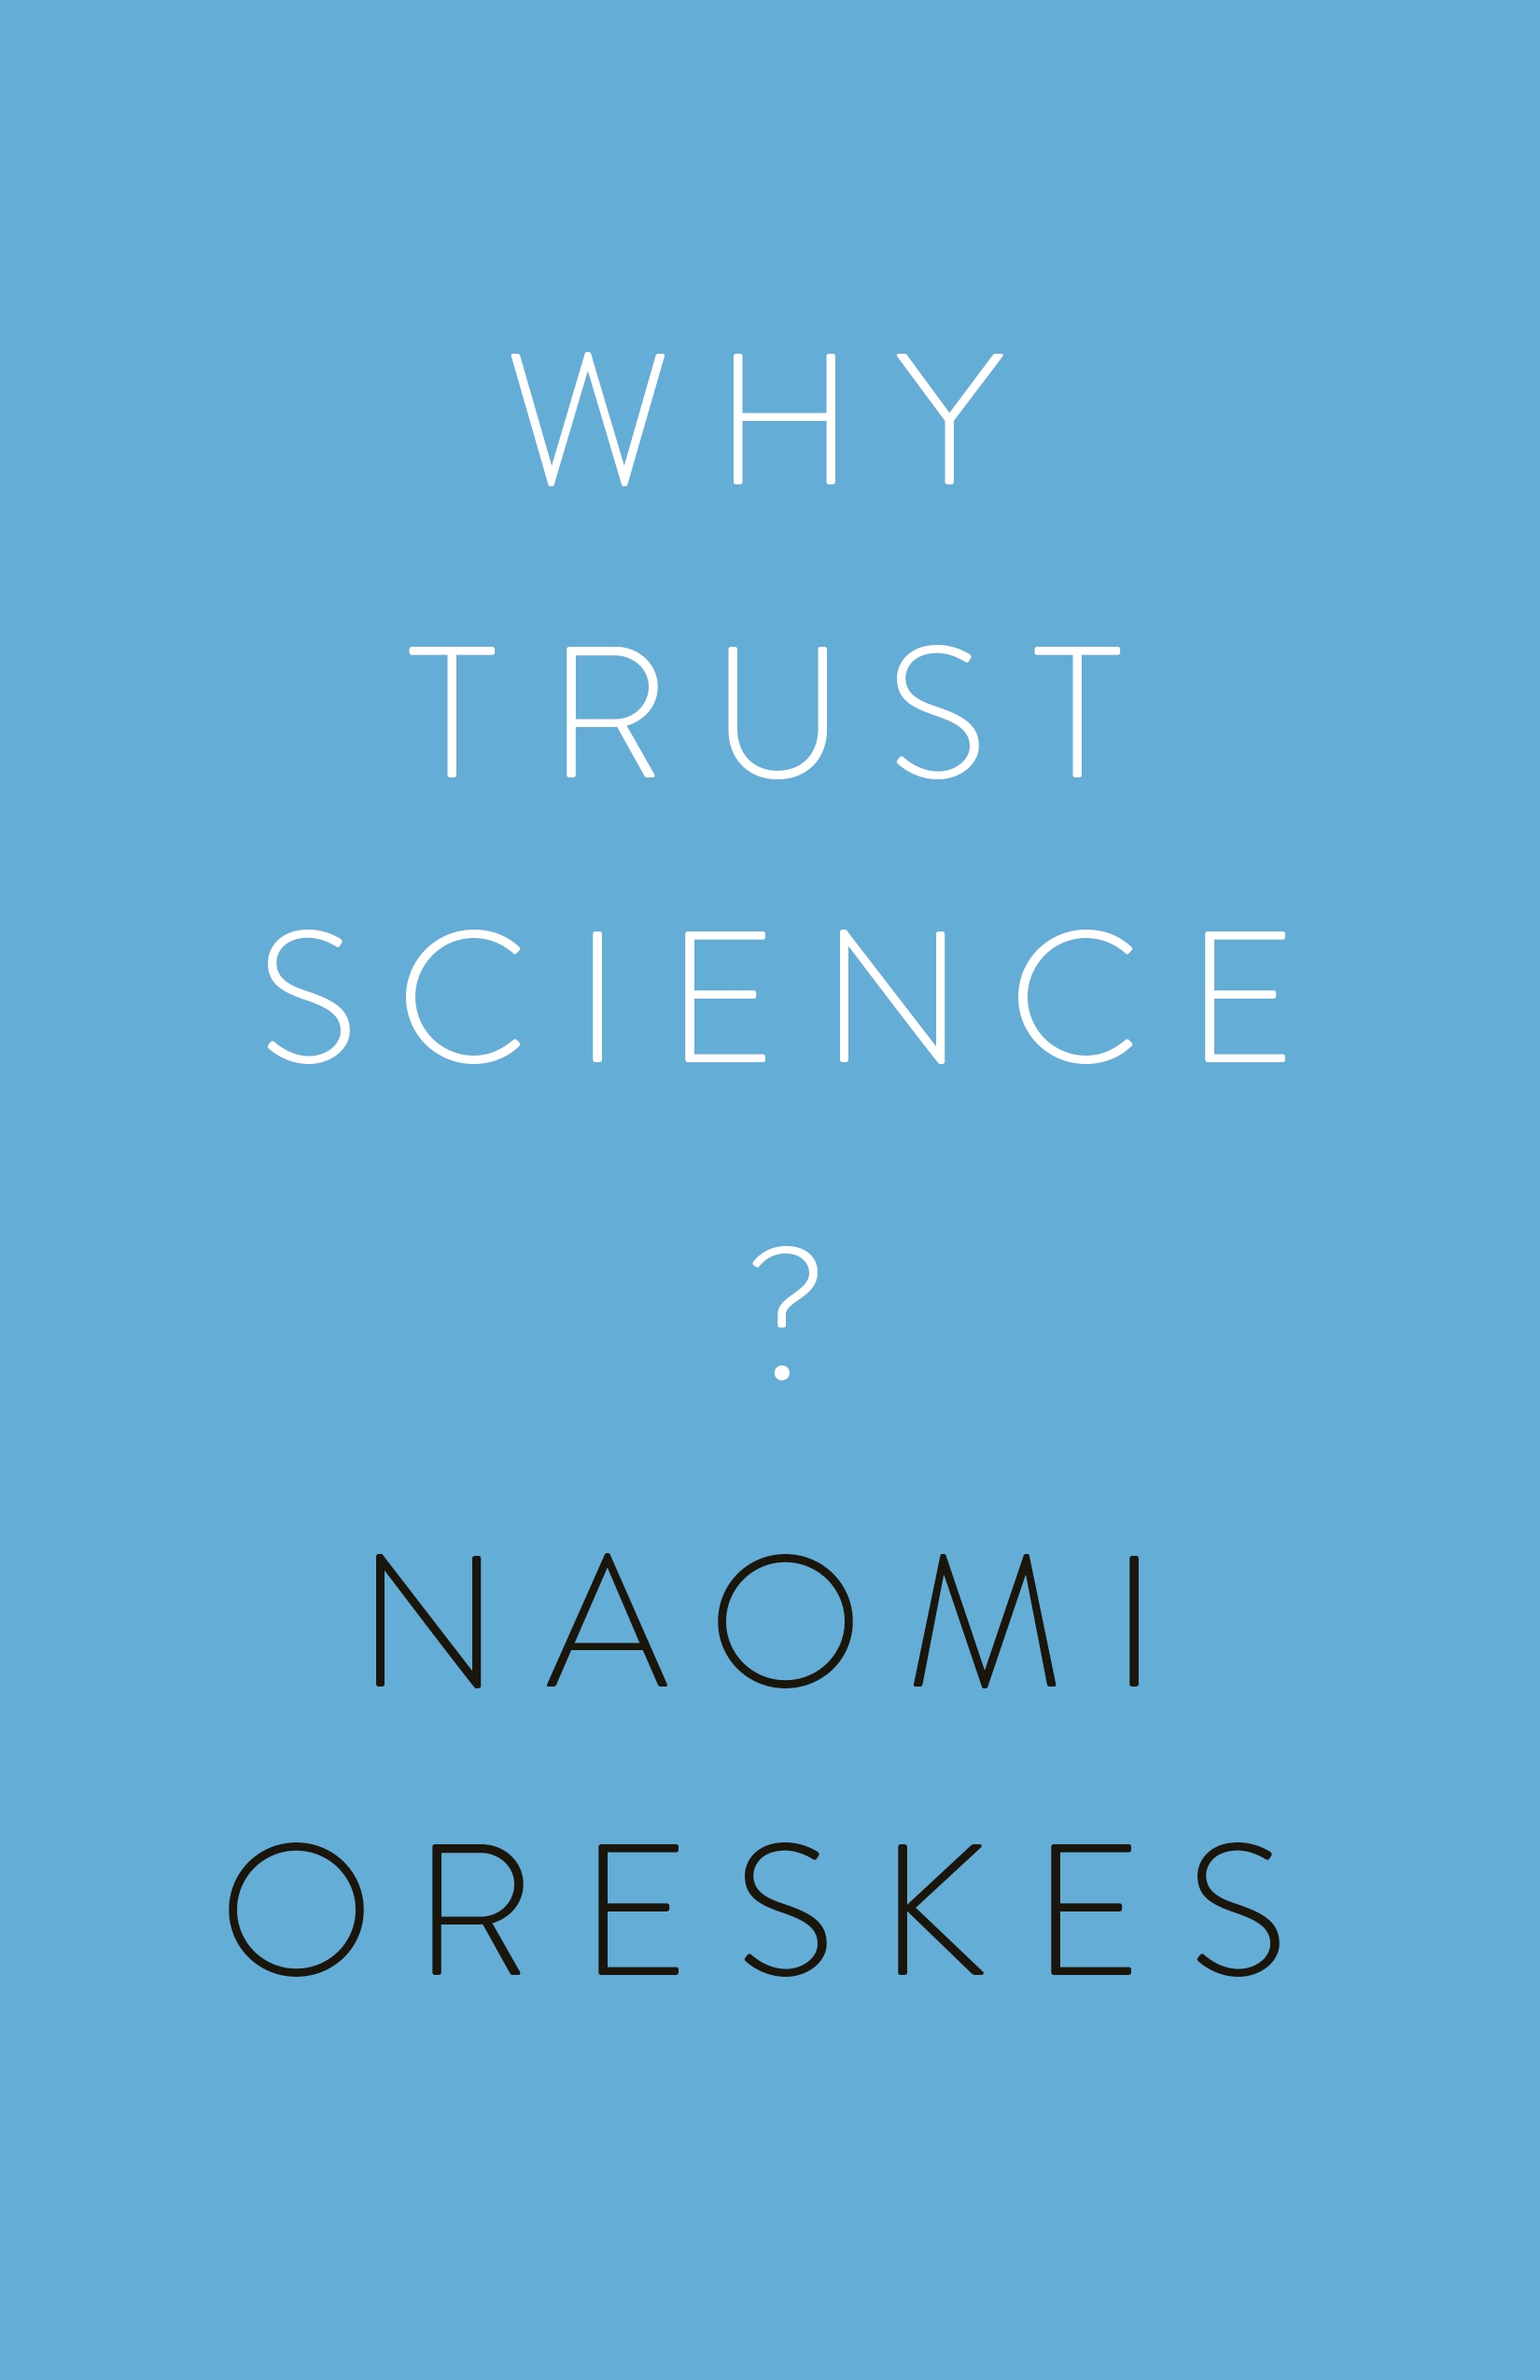 Stephen Macedo, Ottmar Edenhofer, Jon Krosnick, Marc Lange, Naomi Oreskes: Why Trust Science? (2019, Princeton University Press)